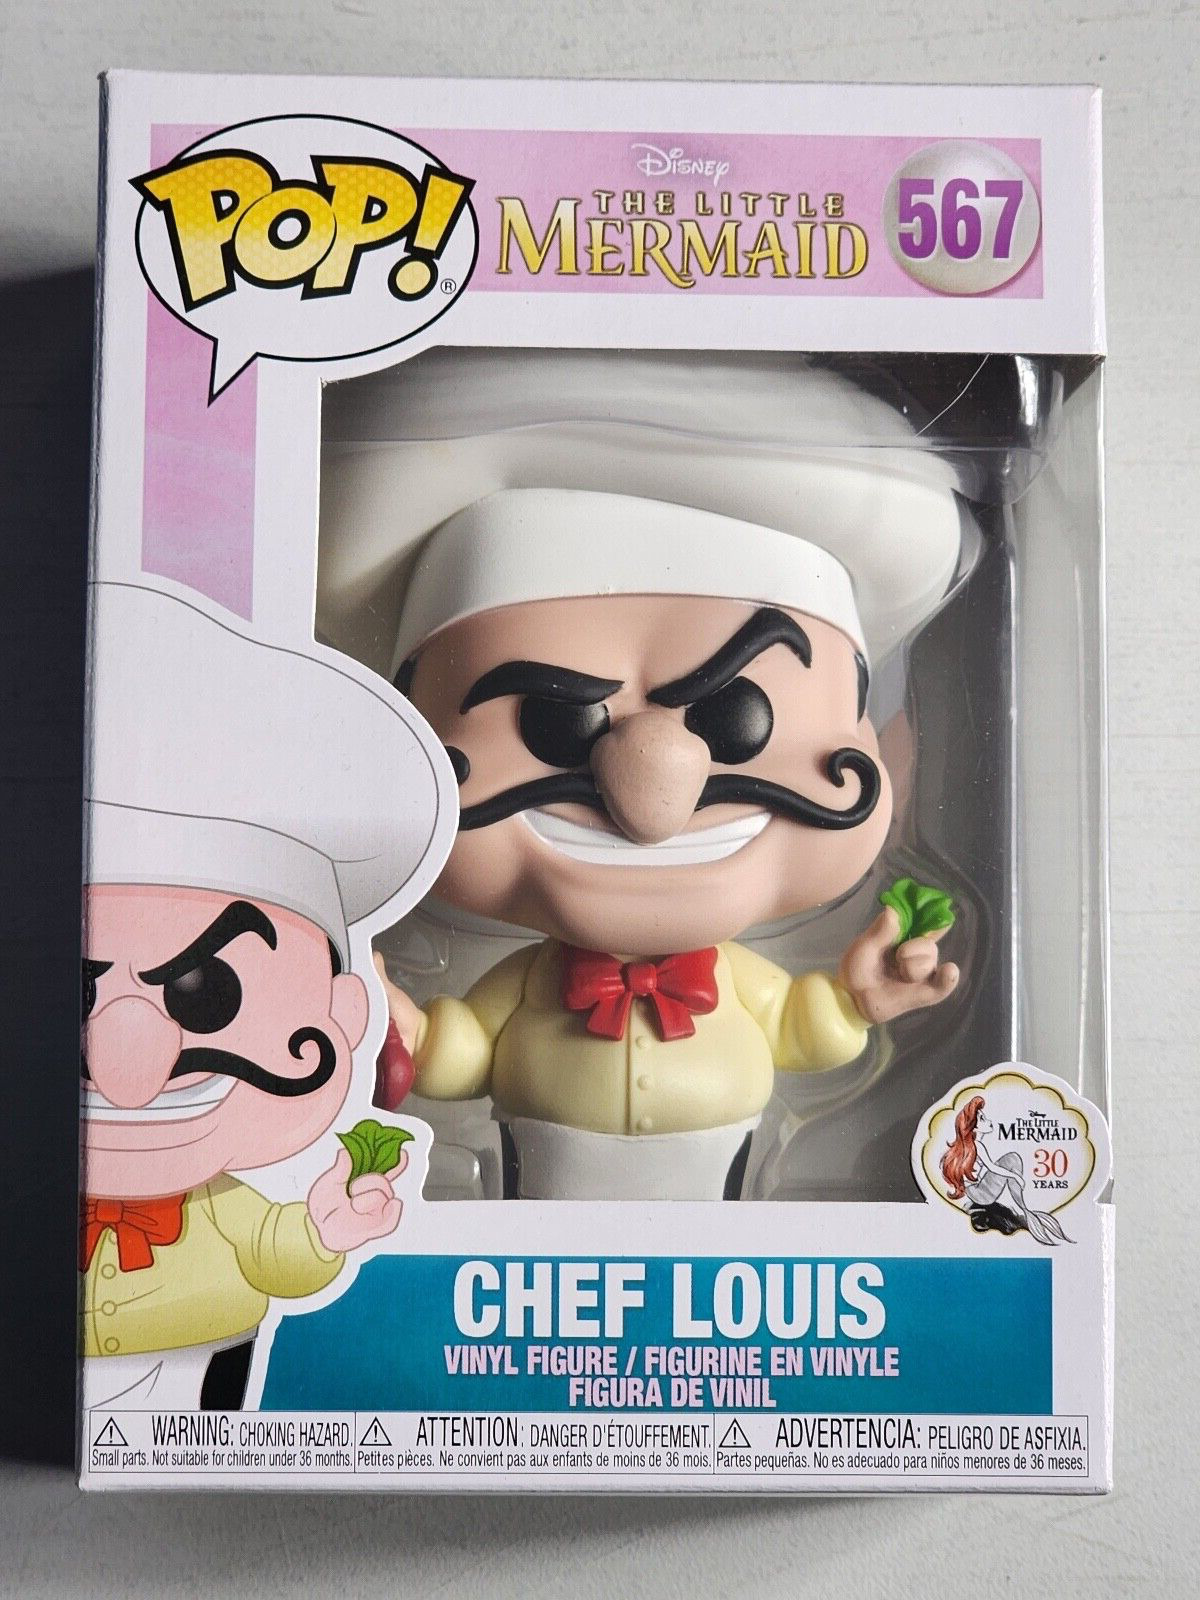 Chef Louis The Little Mermaid 567 Disney Funko Pop Vinyl